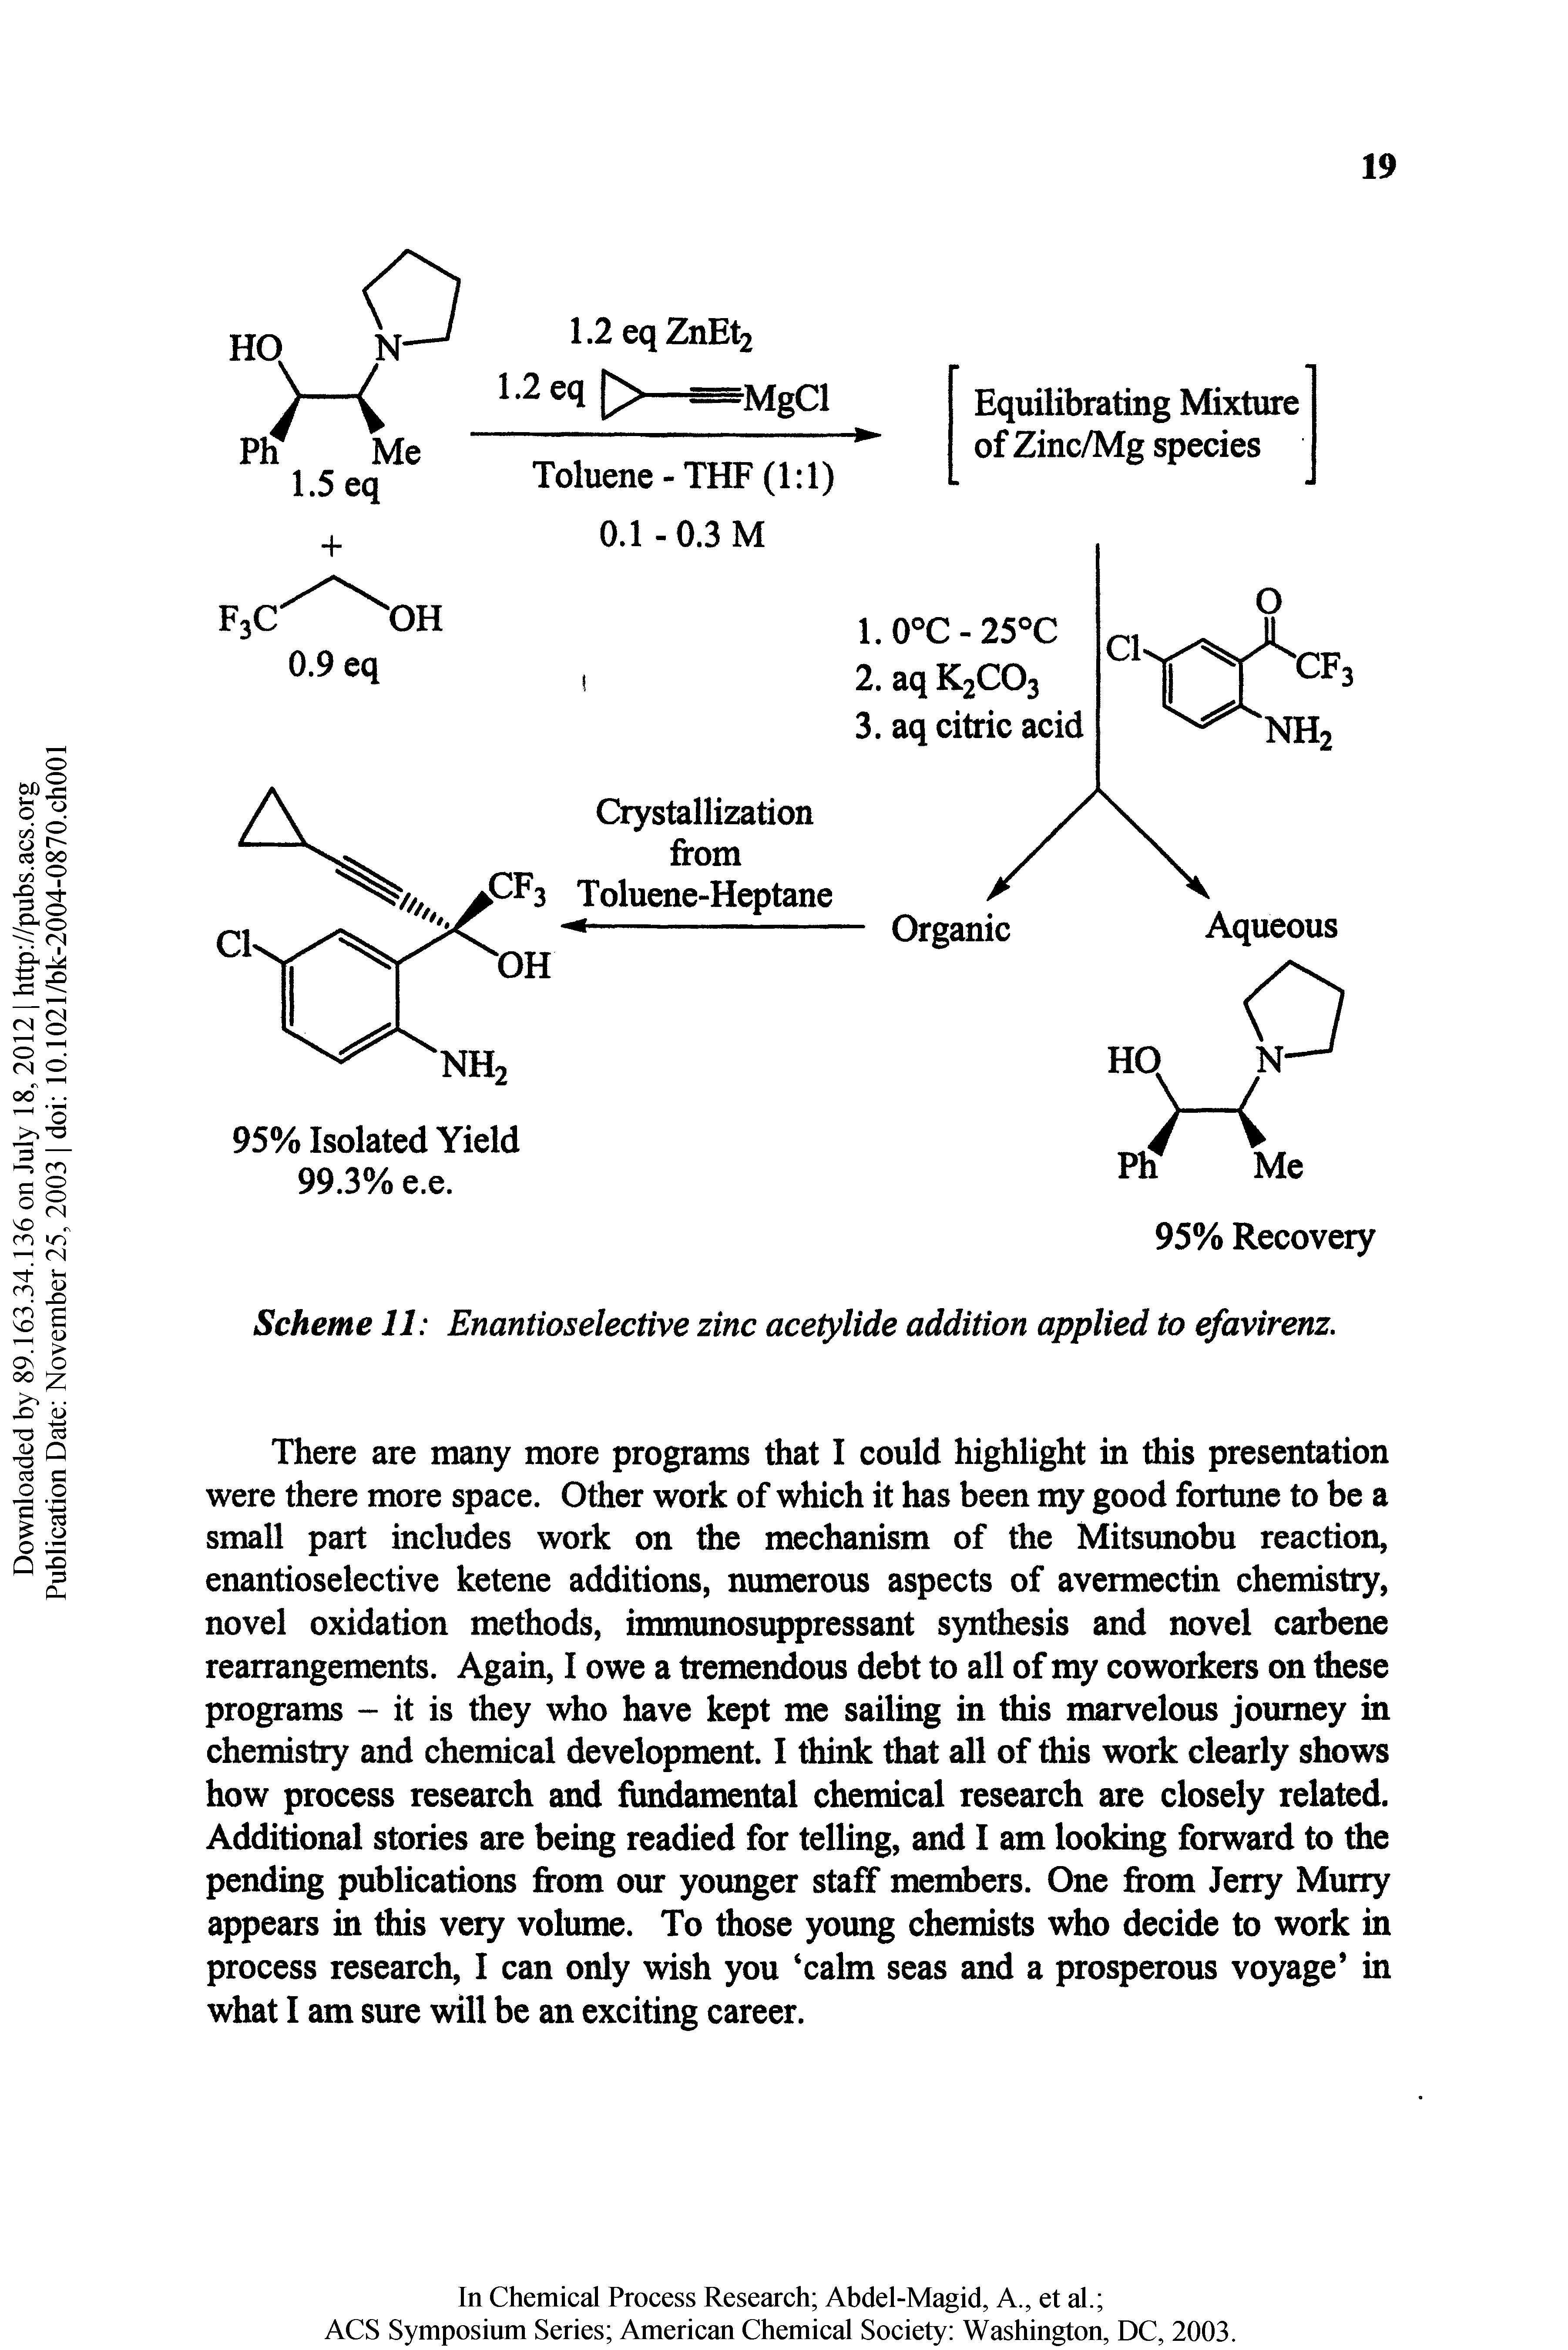 Scheme 11 Enantioselective zinc acetylide addition applied to efavirenz.